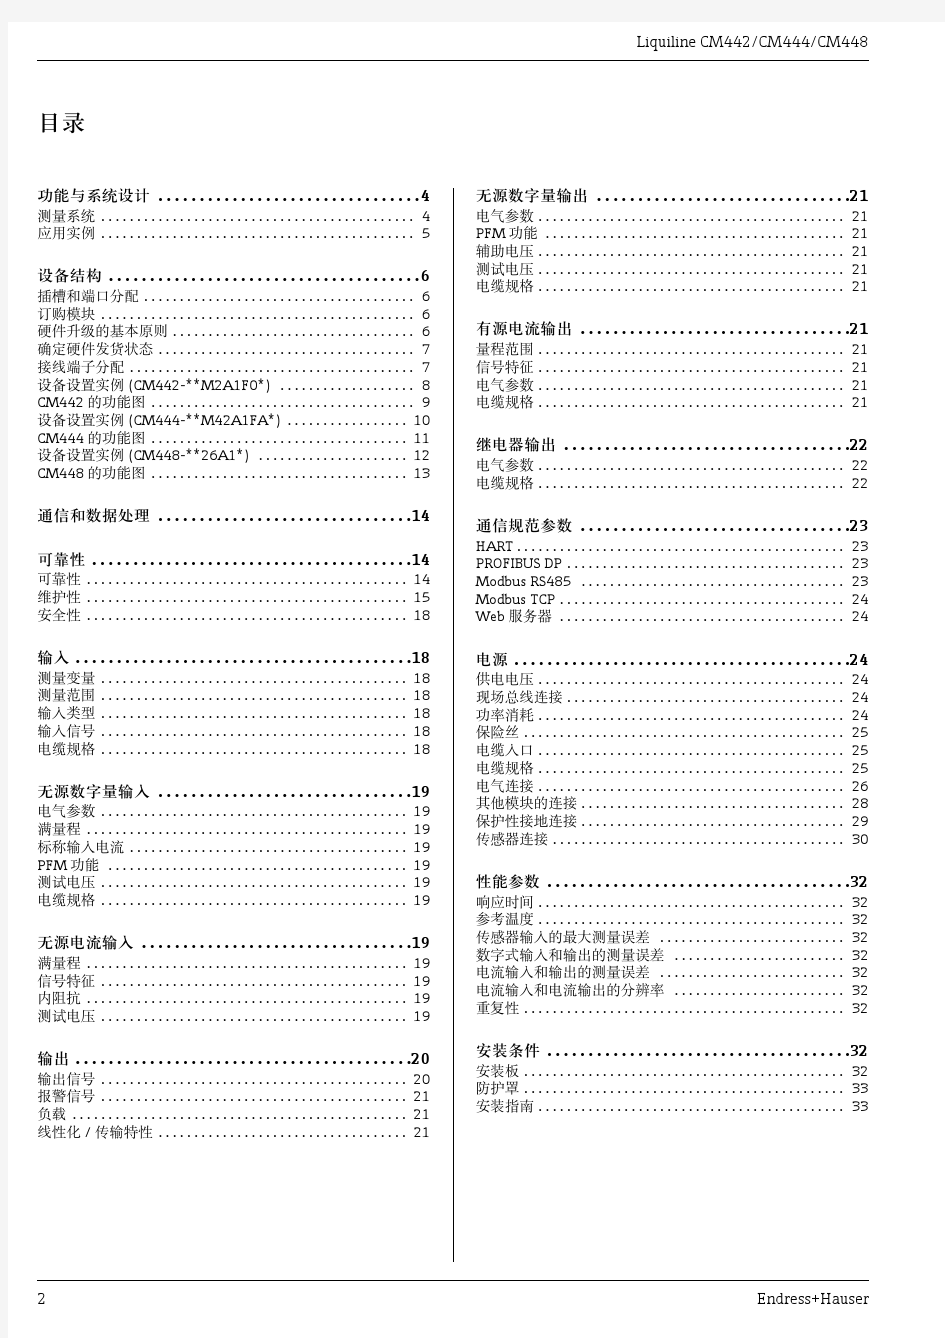 CM44中文技术资料